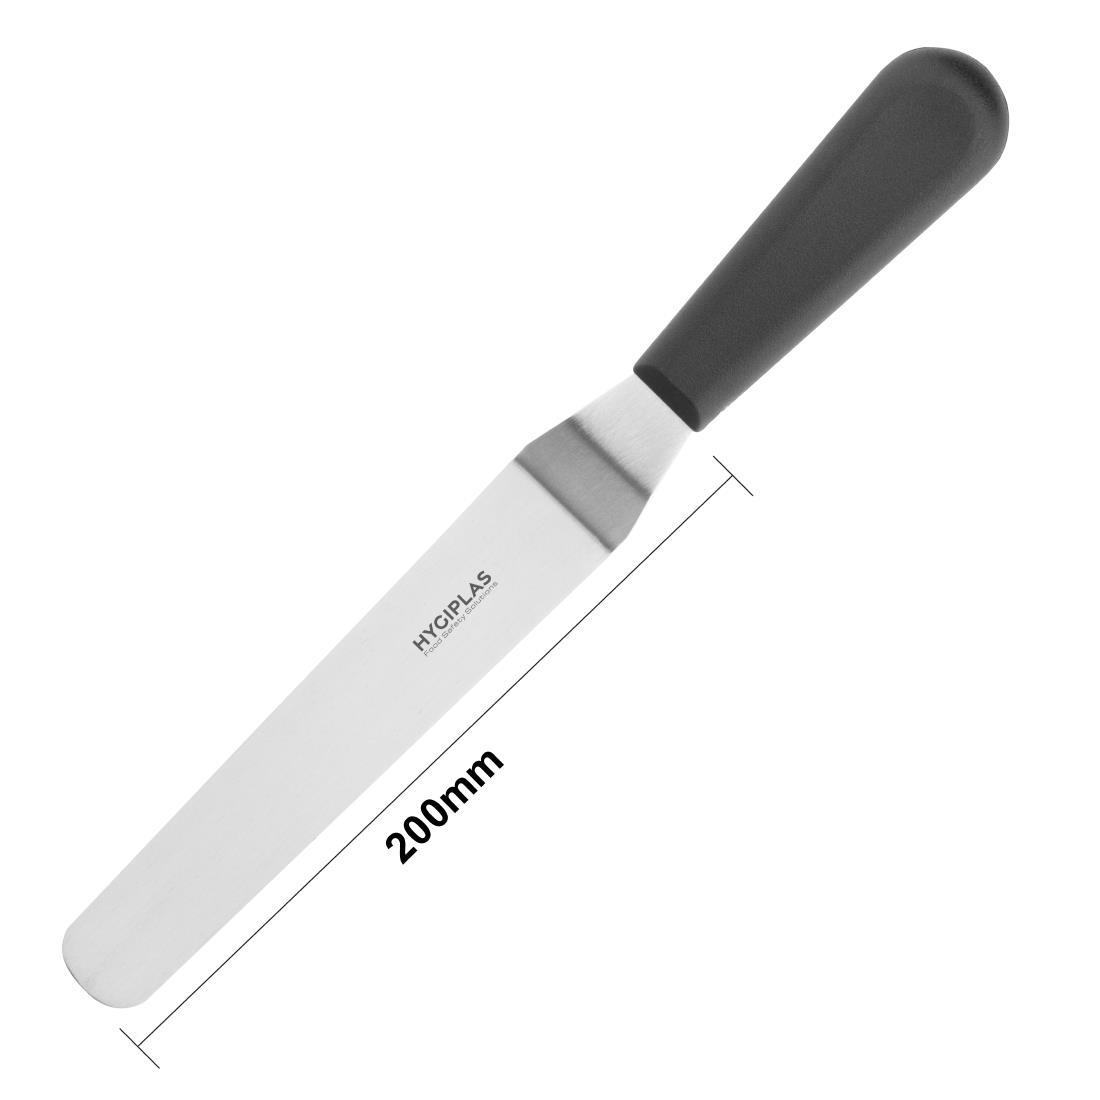 Hygiplas Angled Blade Palette Knife Black 19cm - D410  - 5